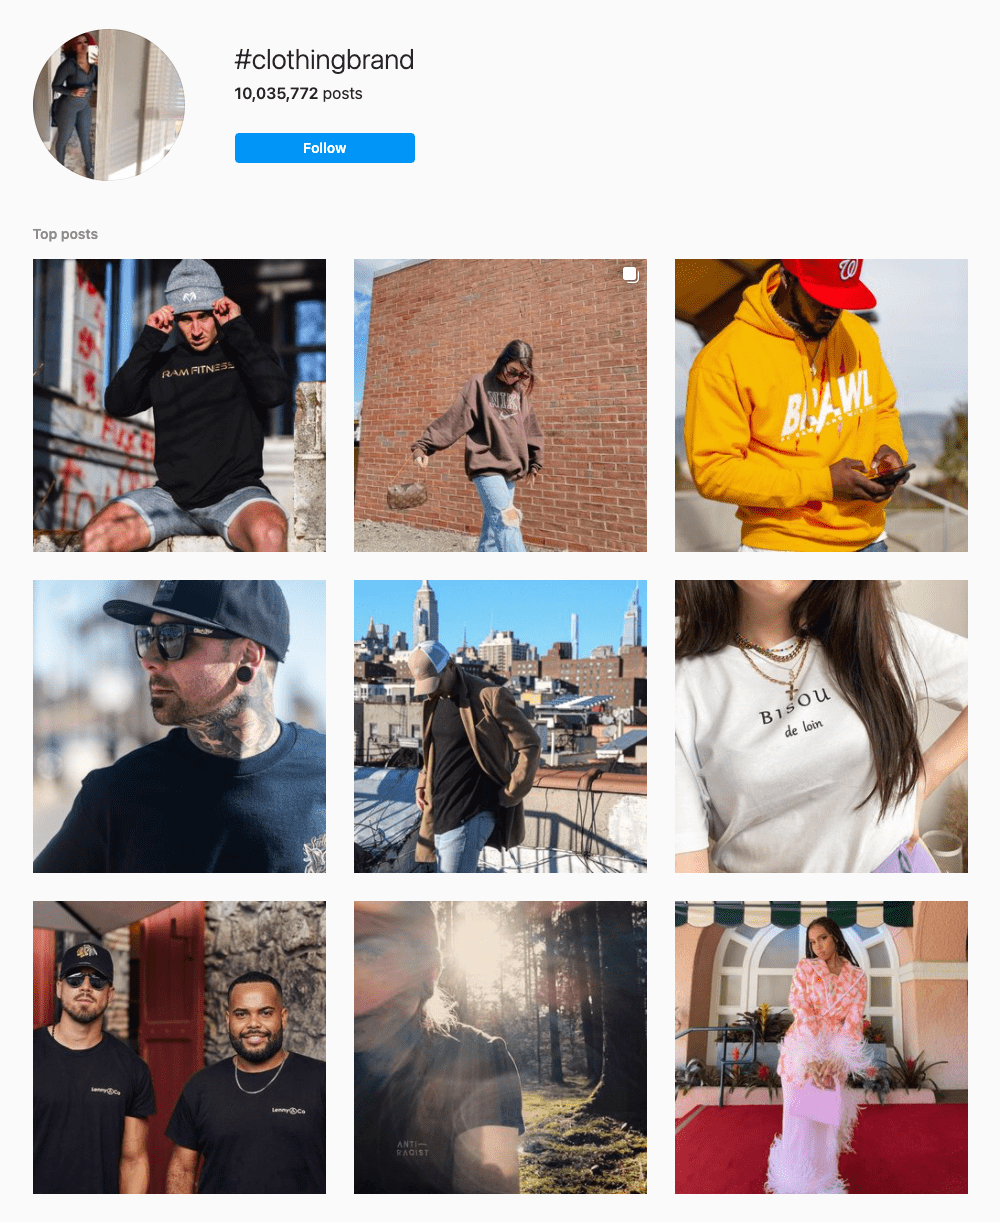 #clothingbrand Hashtags for Instagram